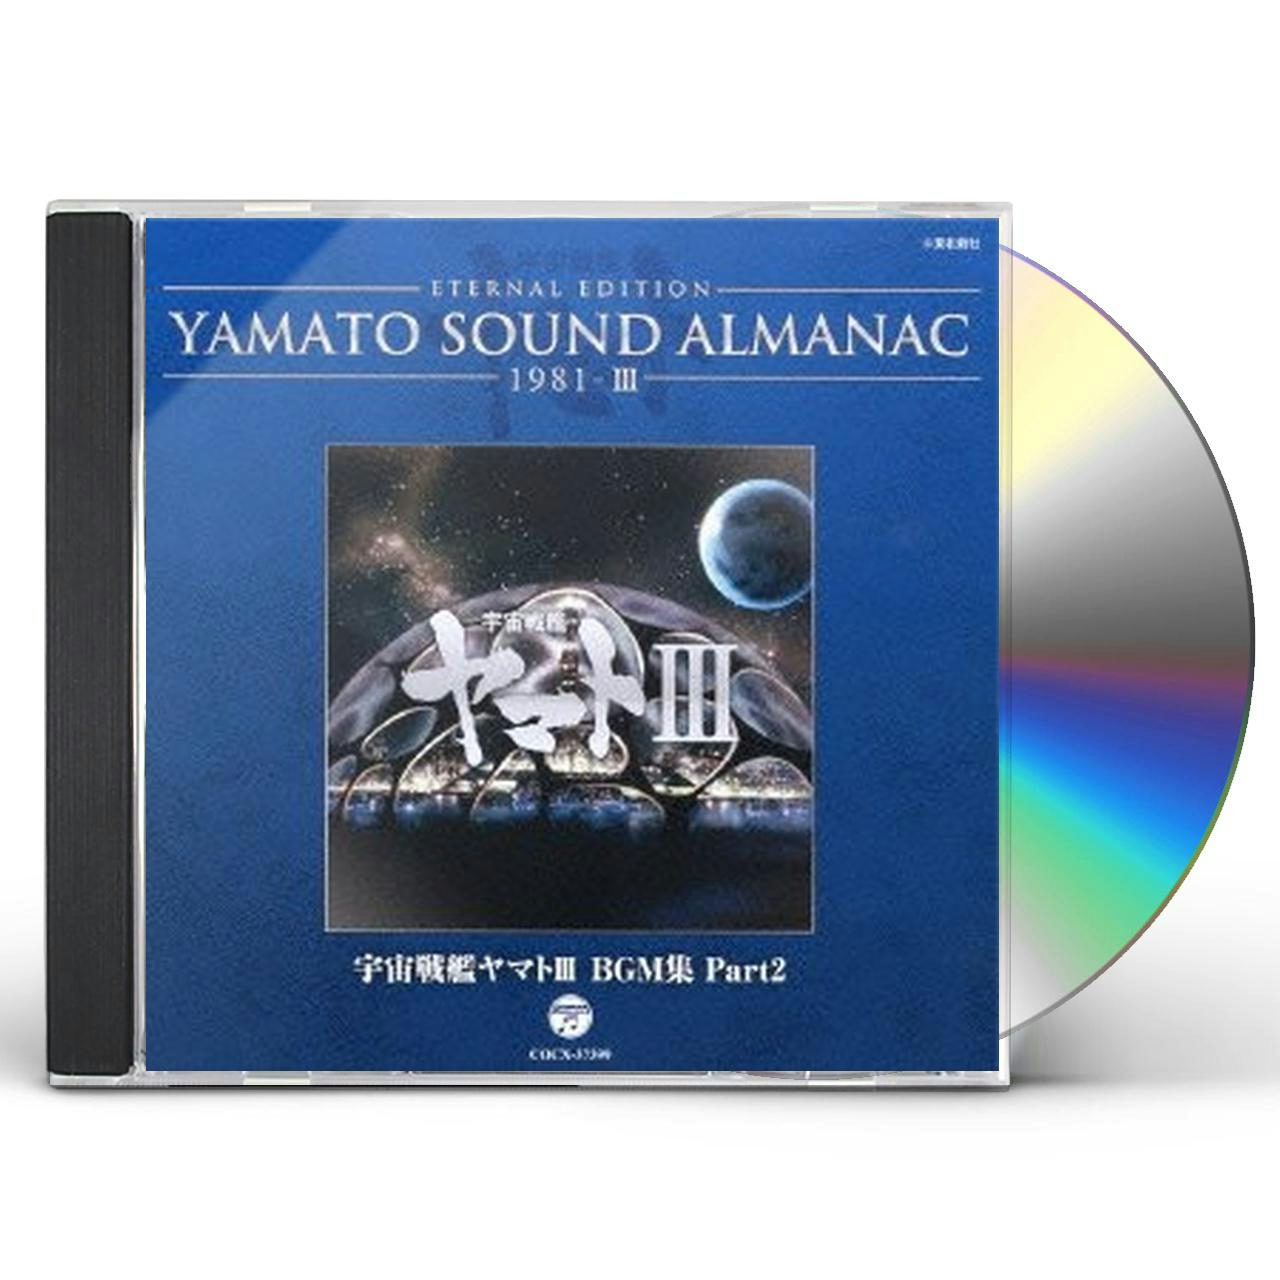 Animation ETERNAL EDITION YAMATO SOUND ALMANAC 1979-1 UCHUU CD